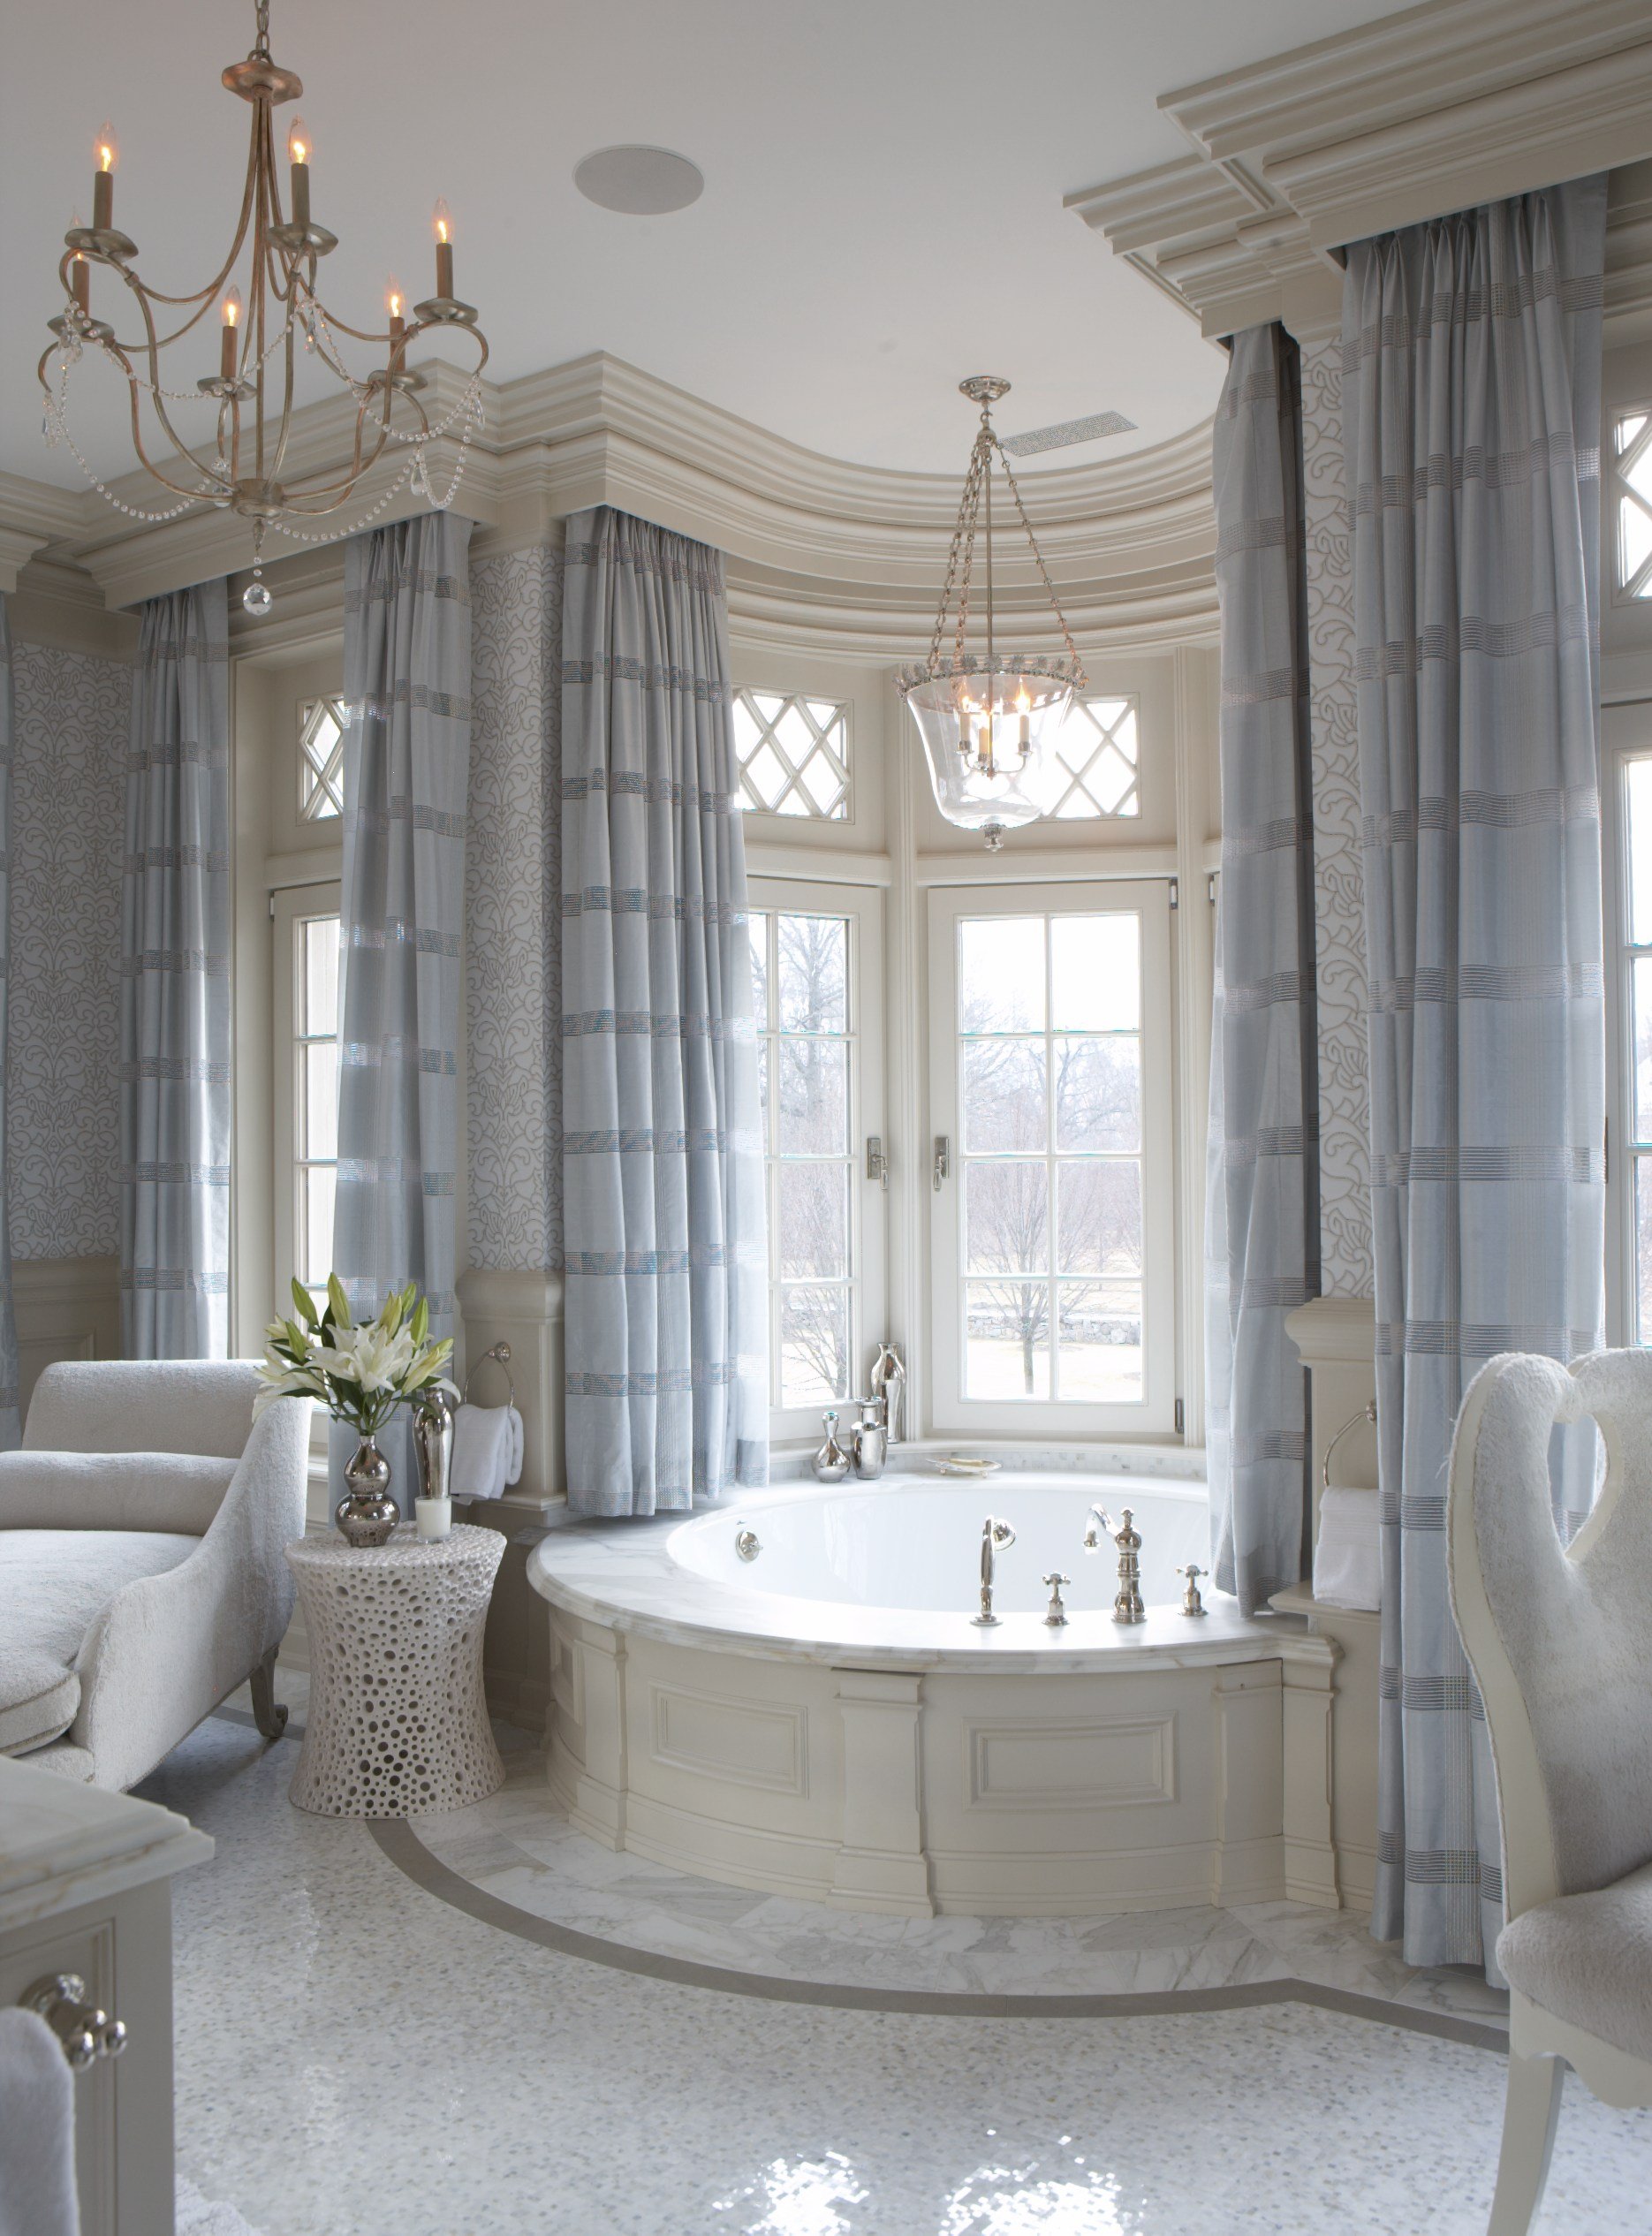 24-large-natural-lighting-white-bath-blue-details-dreamy-jacobean-country-house-bathroom-rinfret-interior-designs.jpg